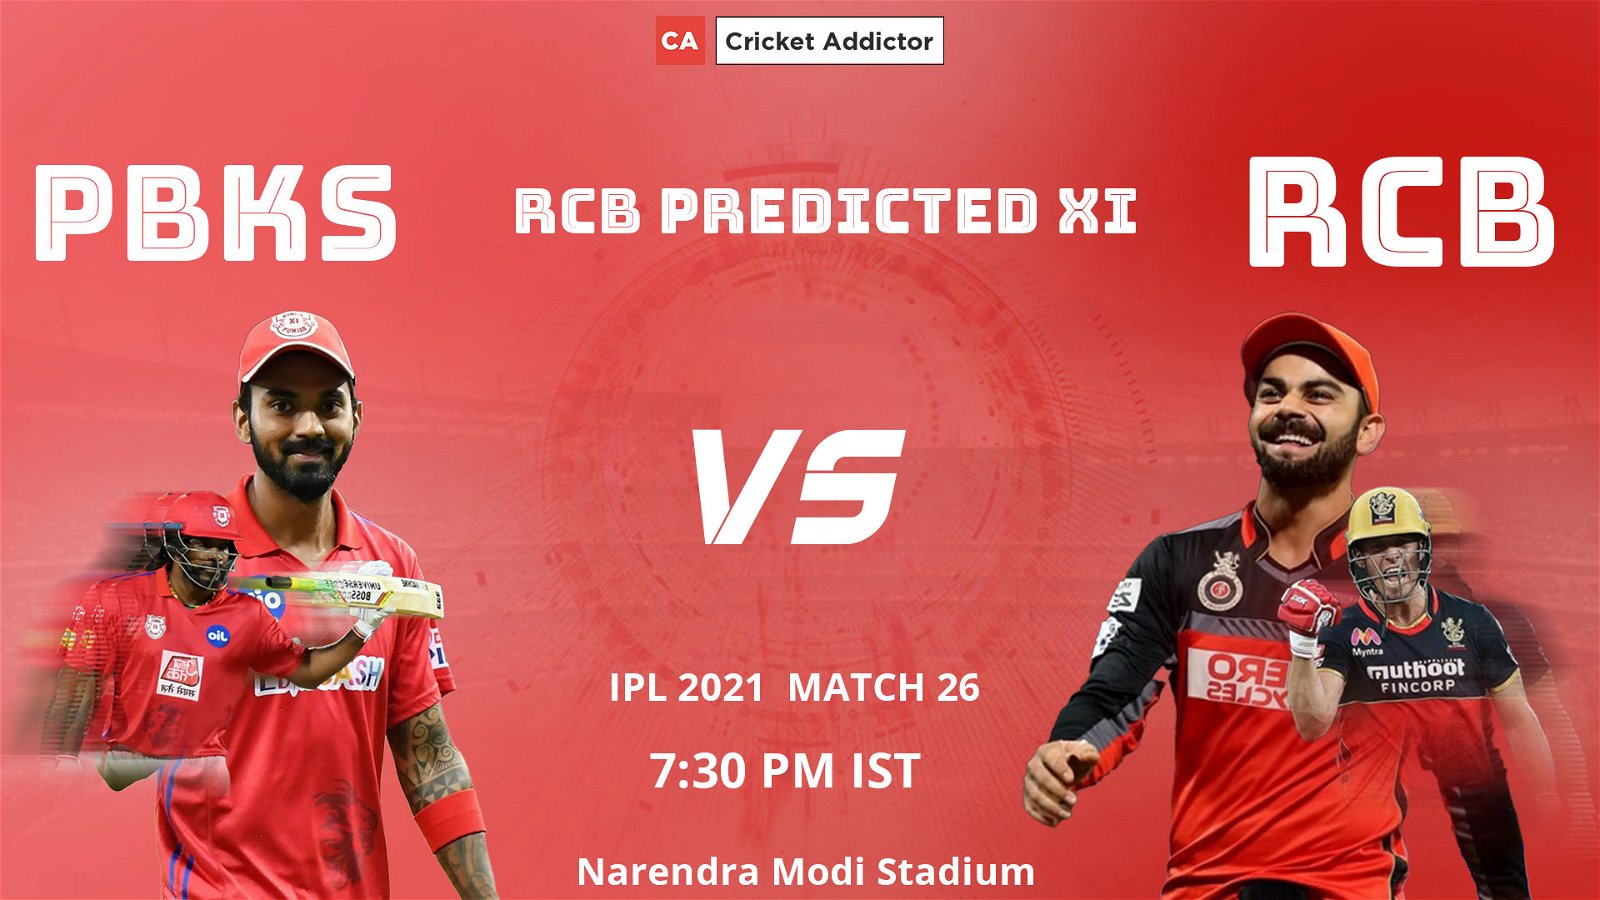 IPL 2021, RCB, Royal Challengers Bangalore, predicted playing XI, playing XI, PBKS vs RCB